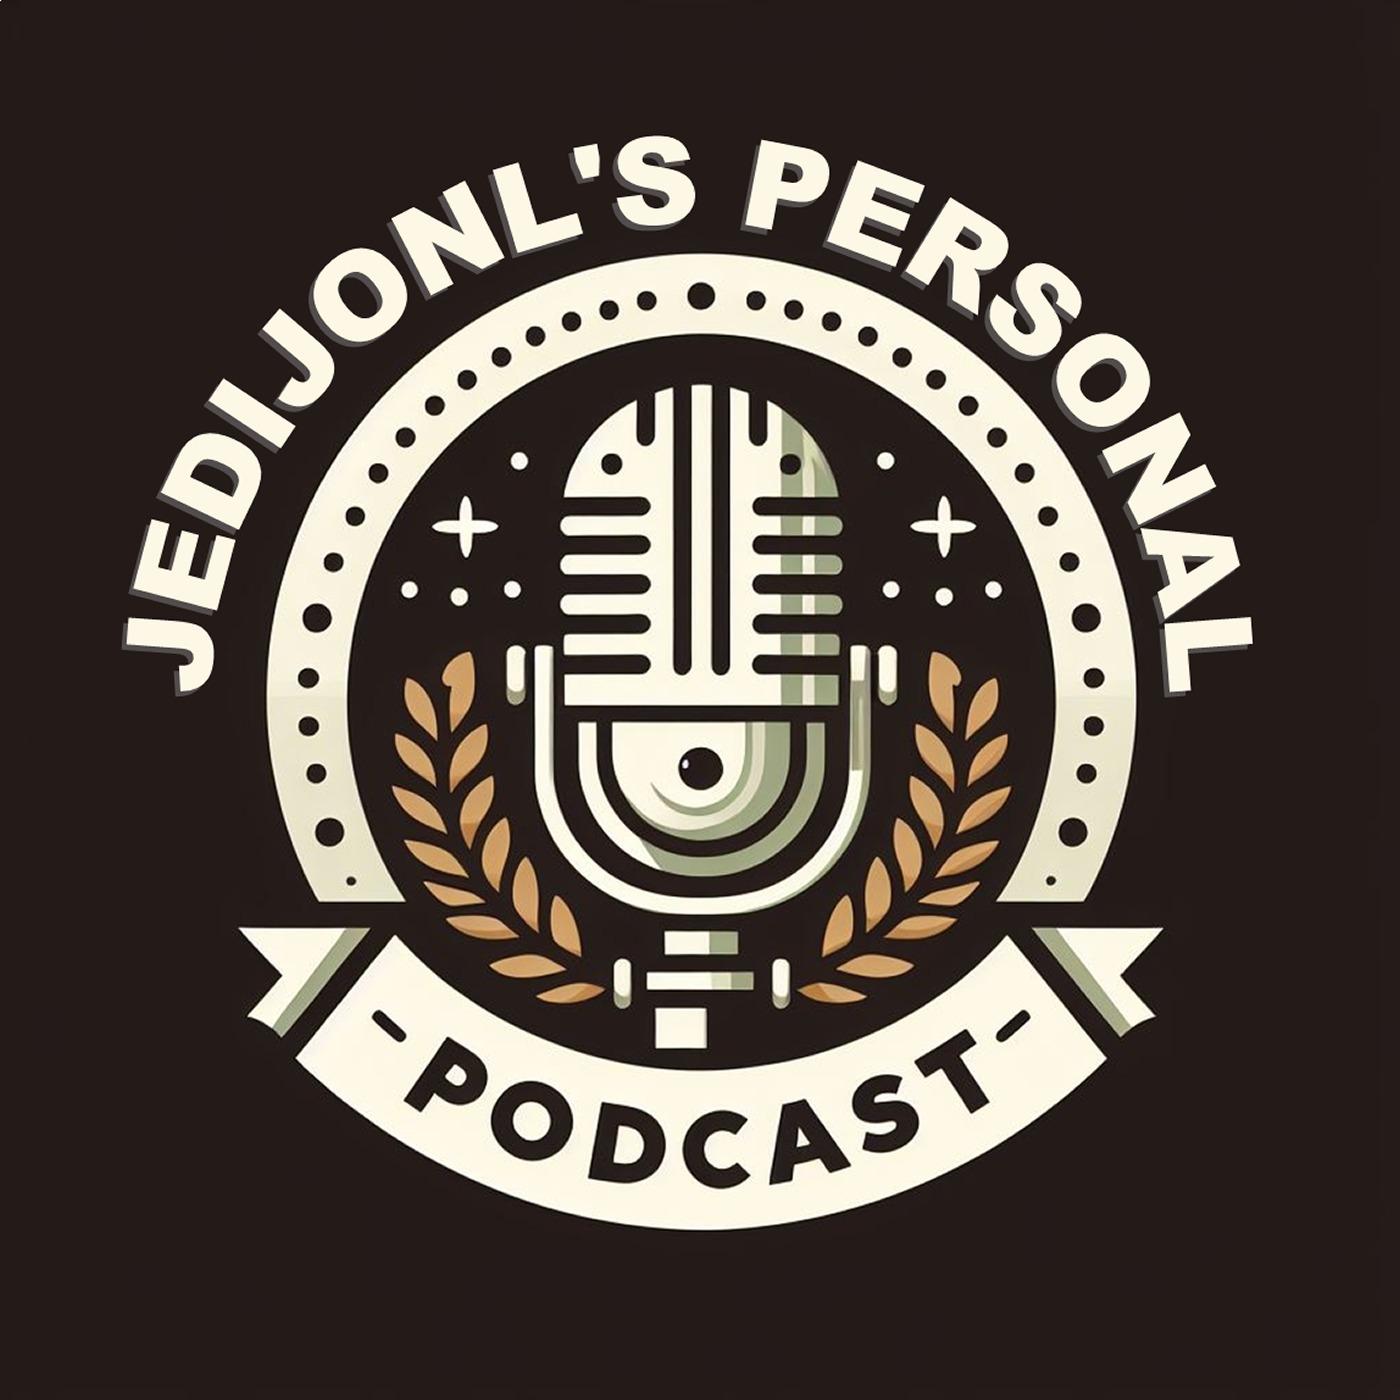 JediJonL's Personal Podcast